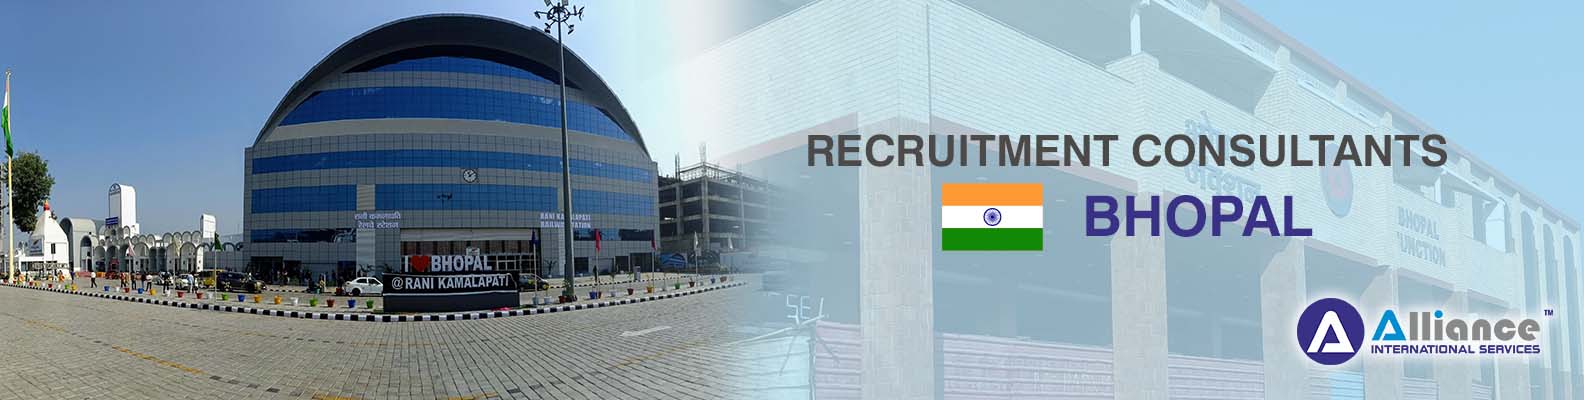 Recruitment Consultants Bhopal